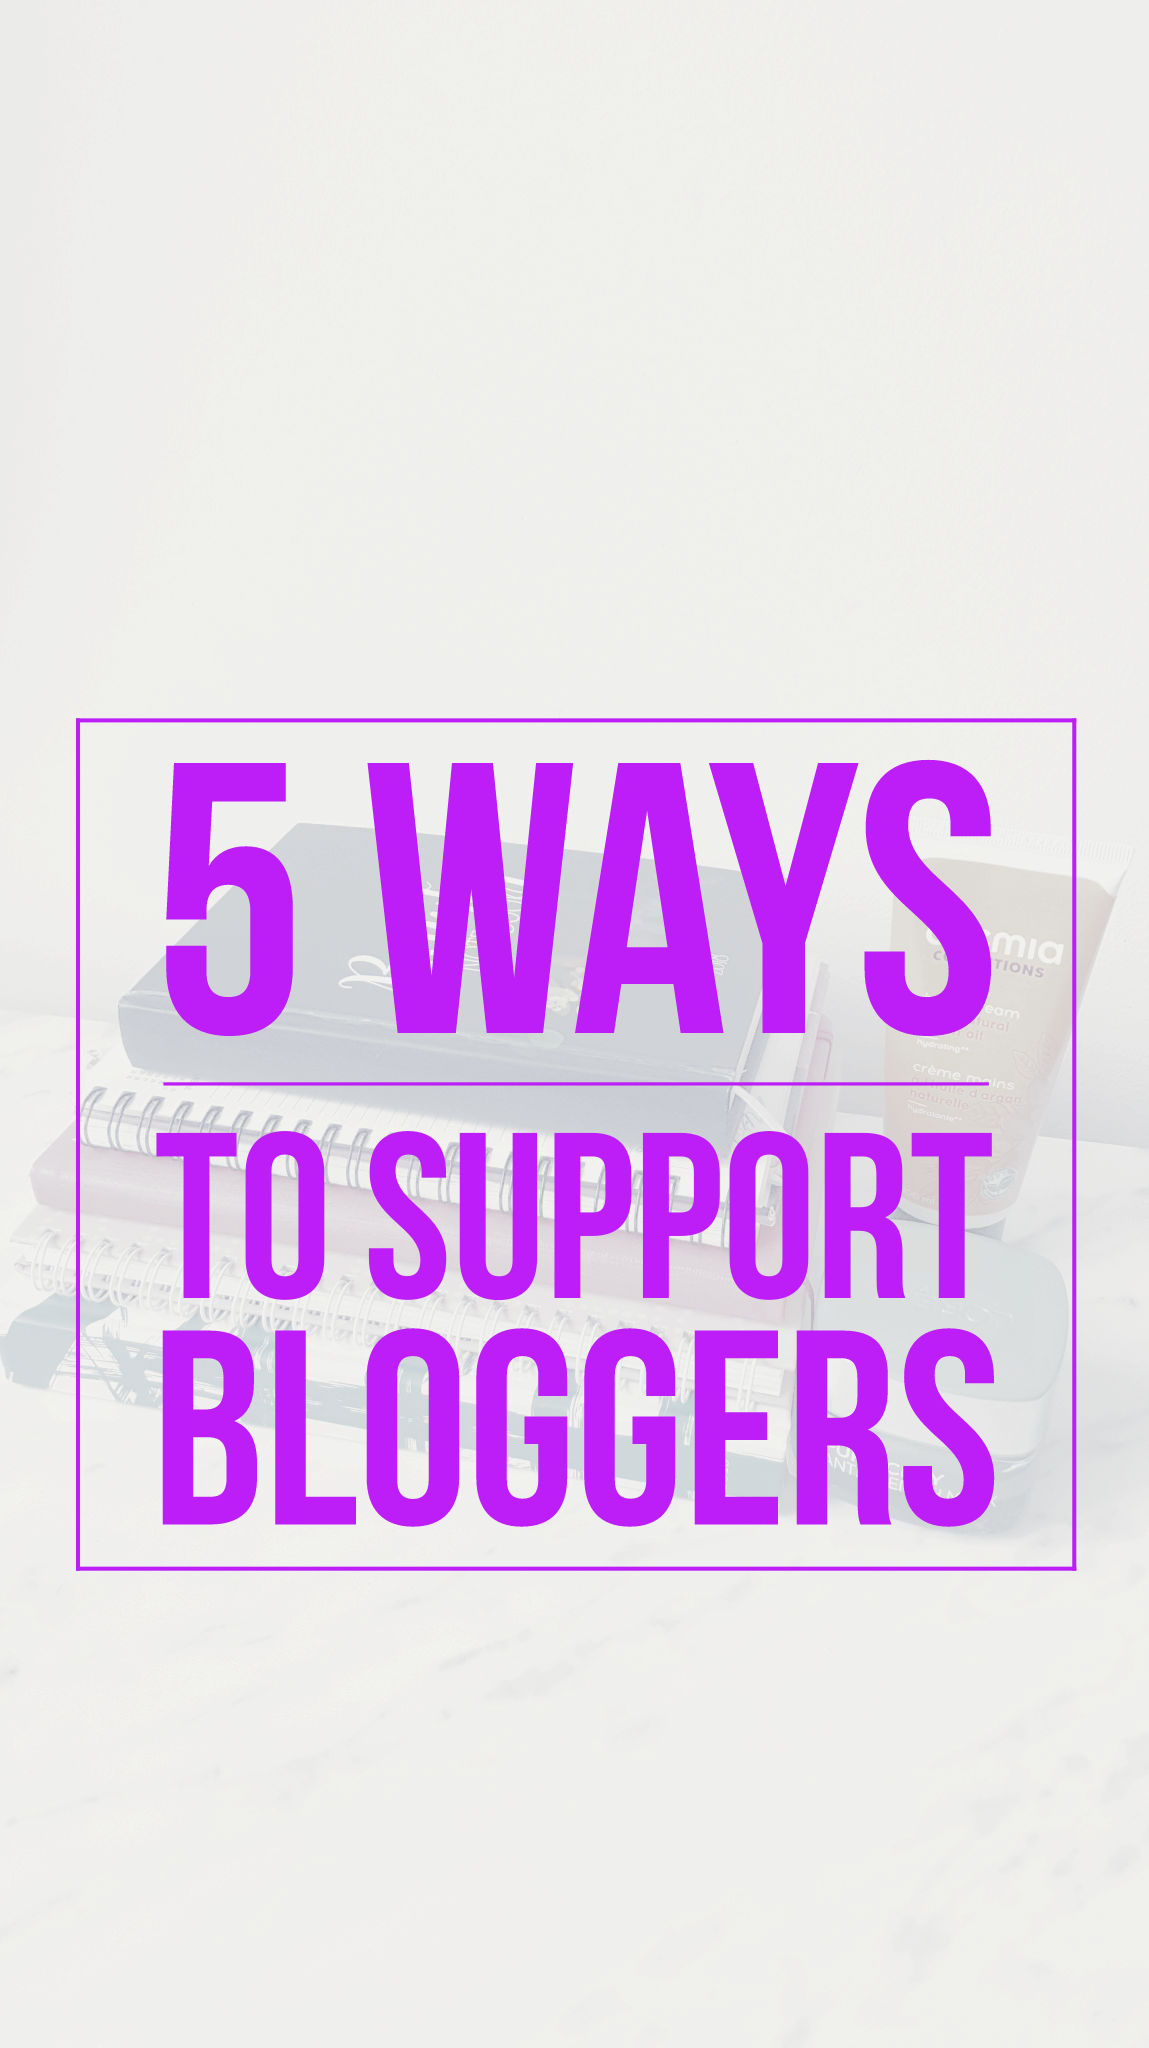 5 ways to support bloggers deboratentis (1)